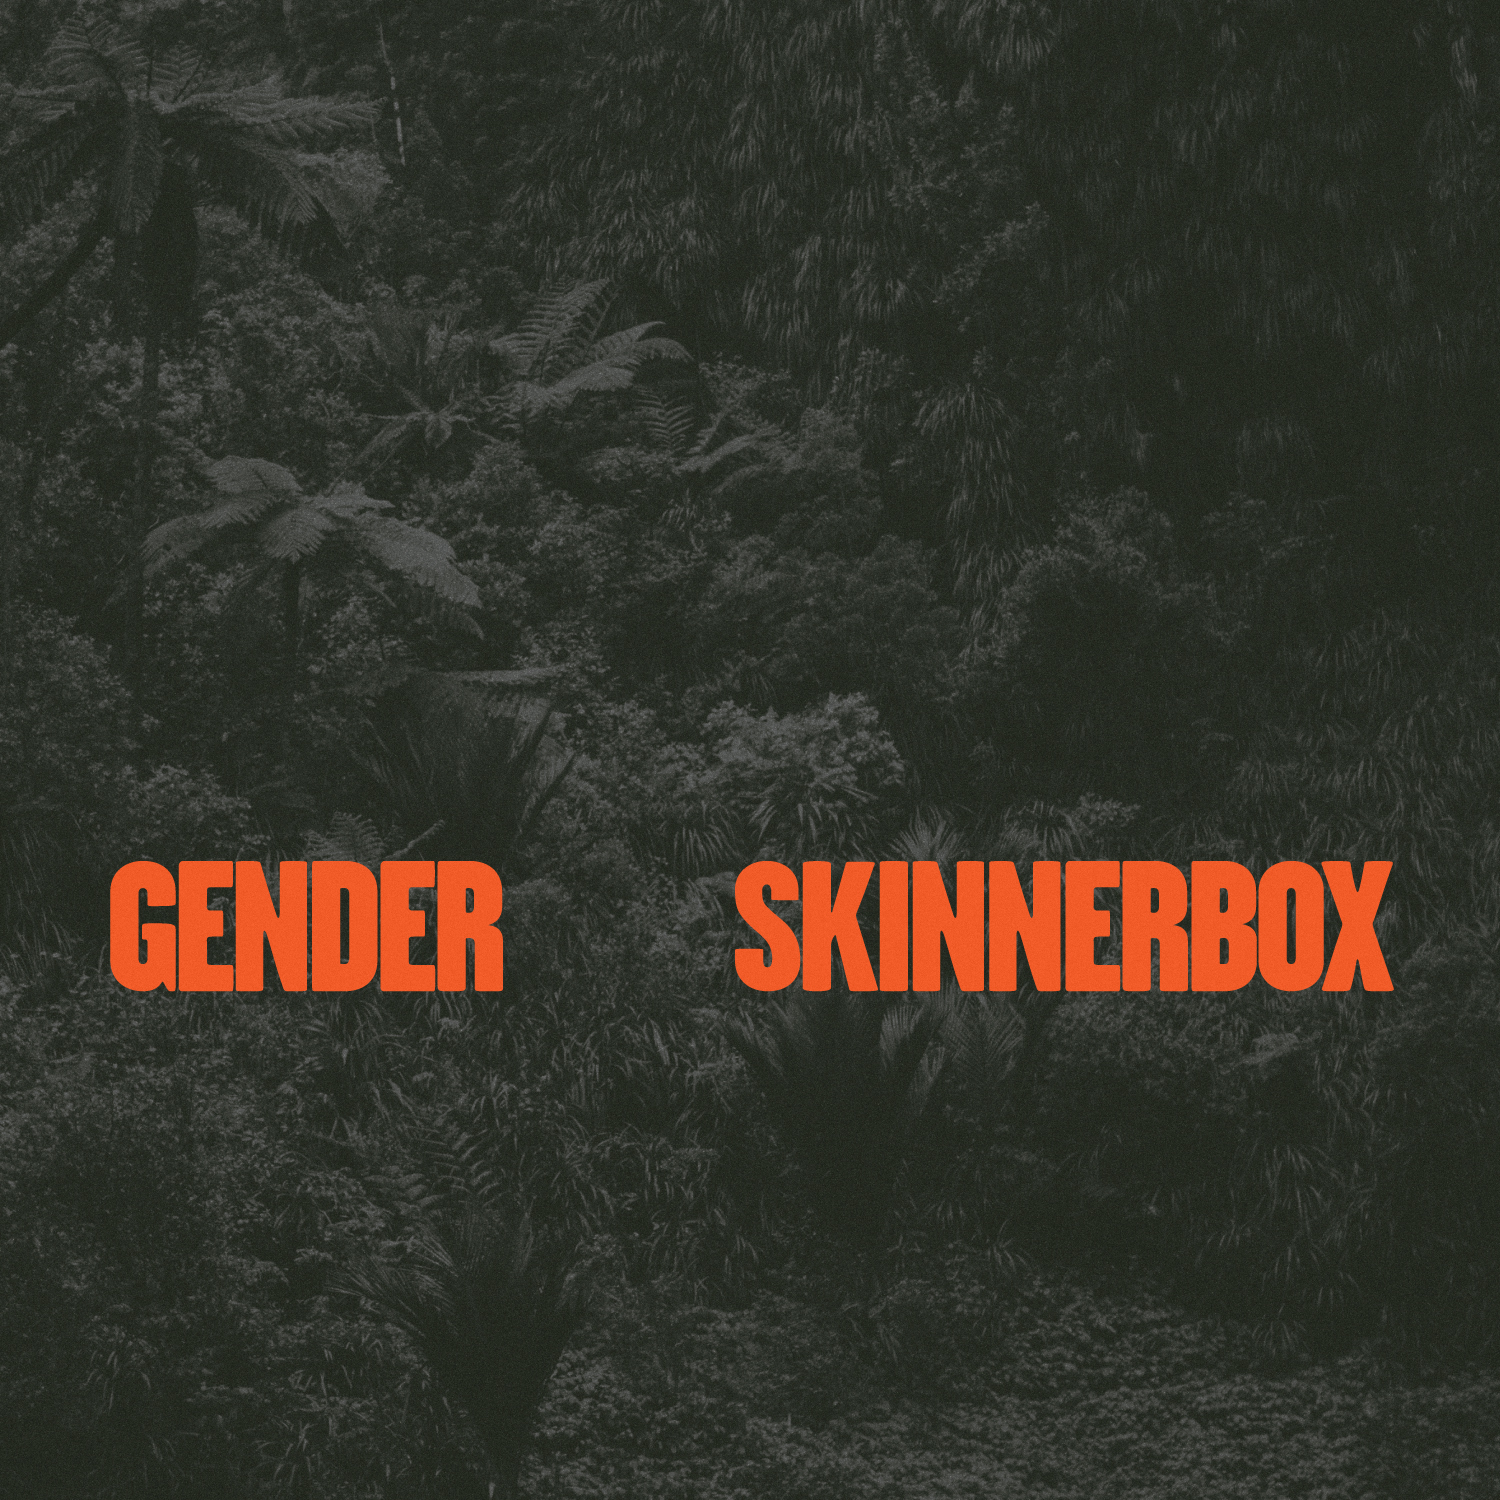 Landa Skinnerbox - Gender (Original Mix)